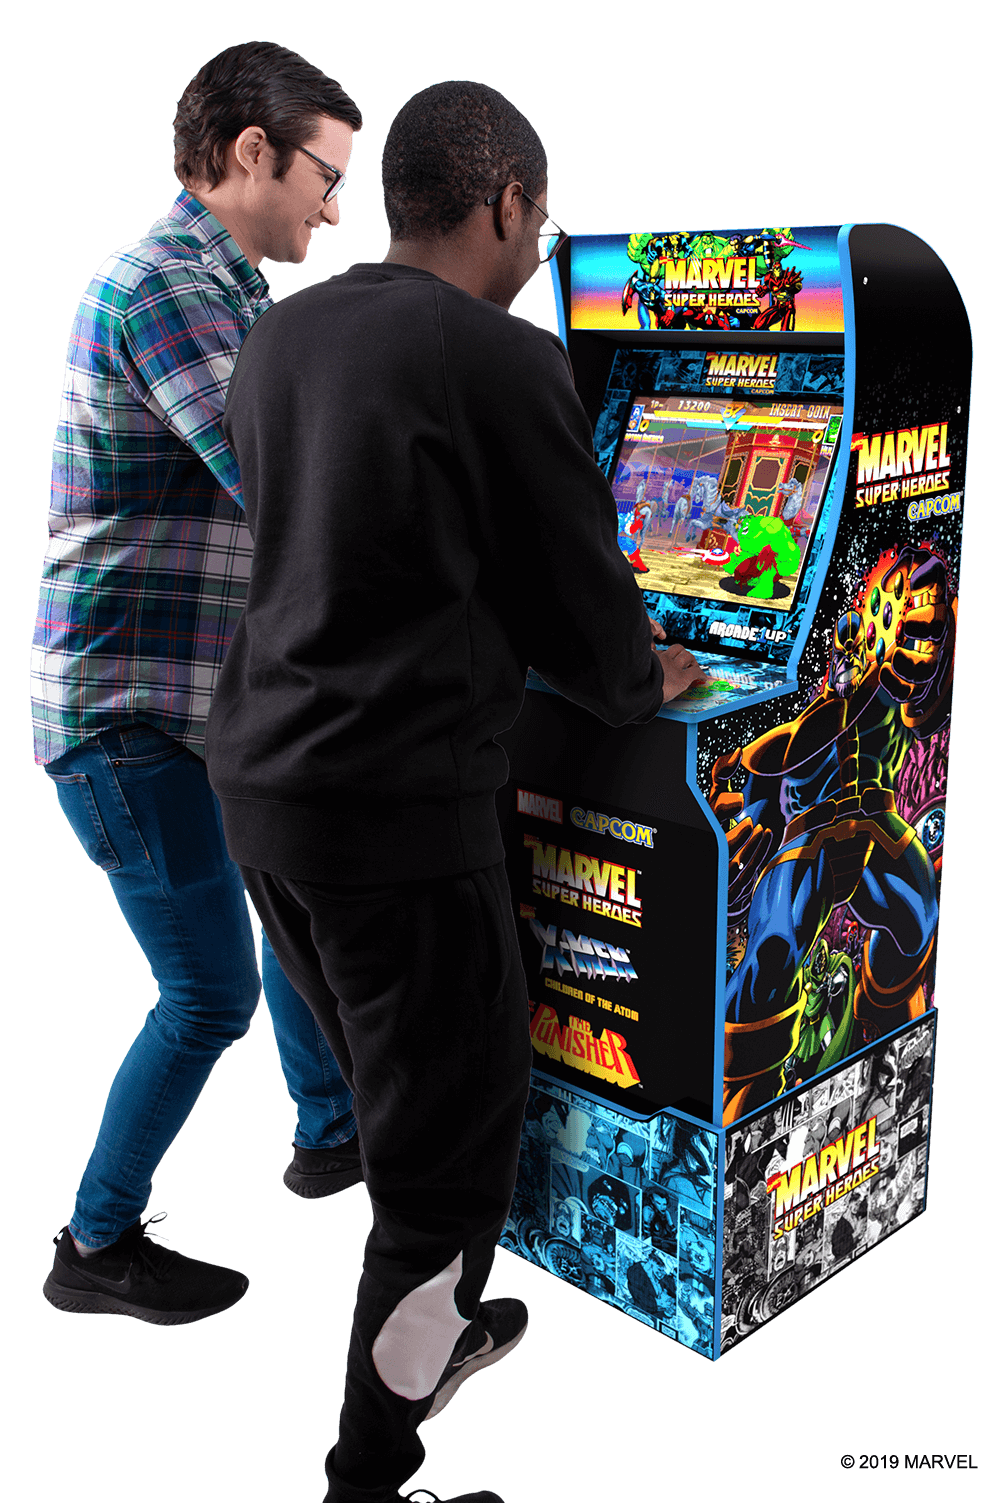 marvel superheroes arcade machine arcade1up 4ft